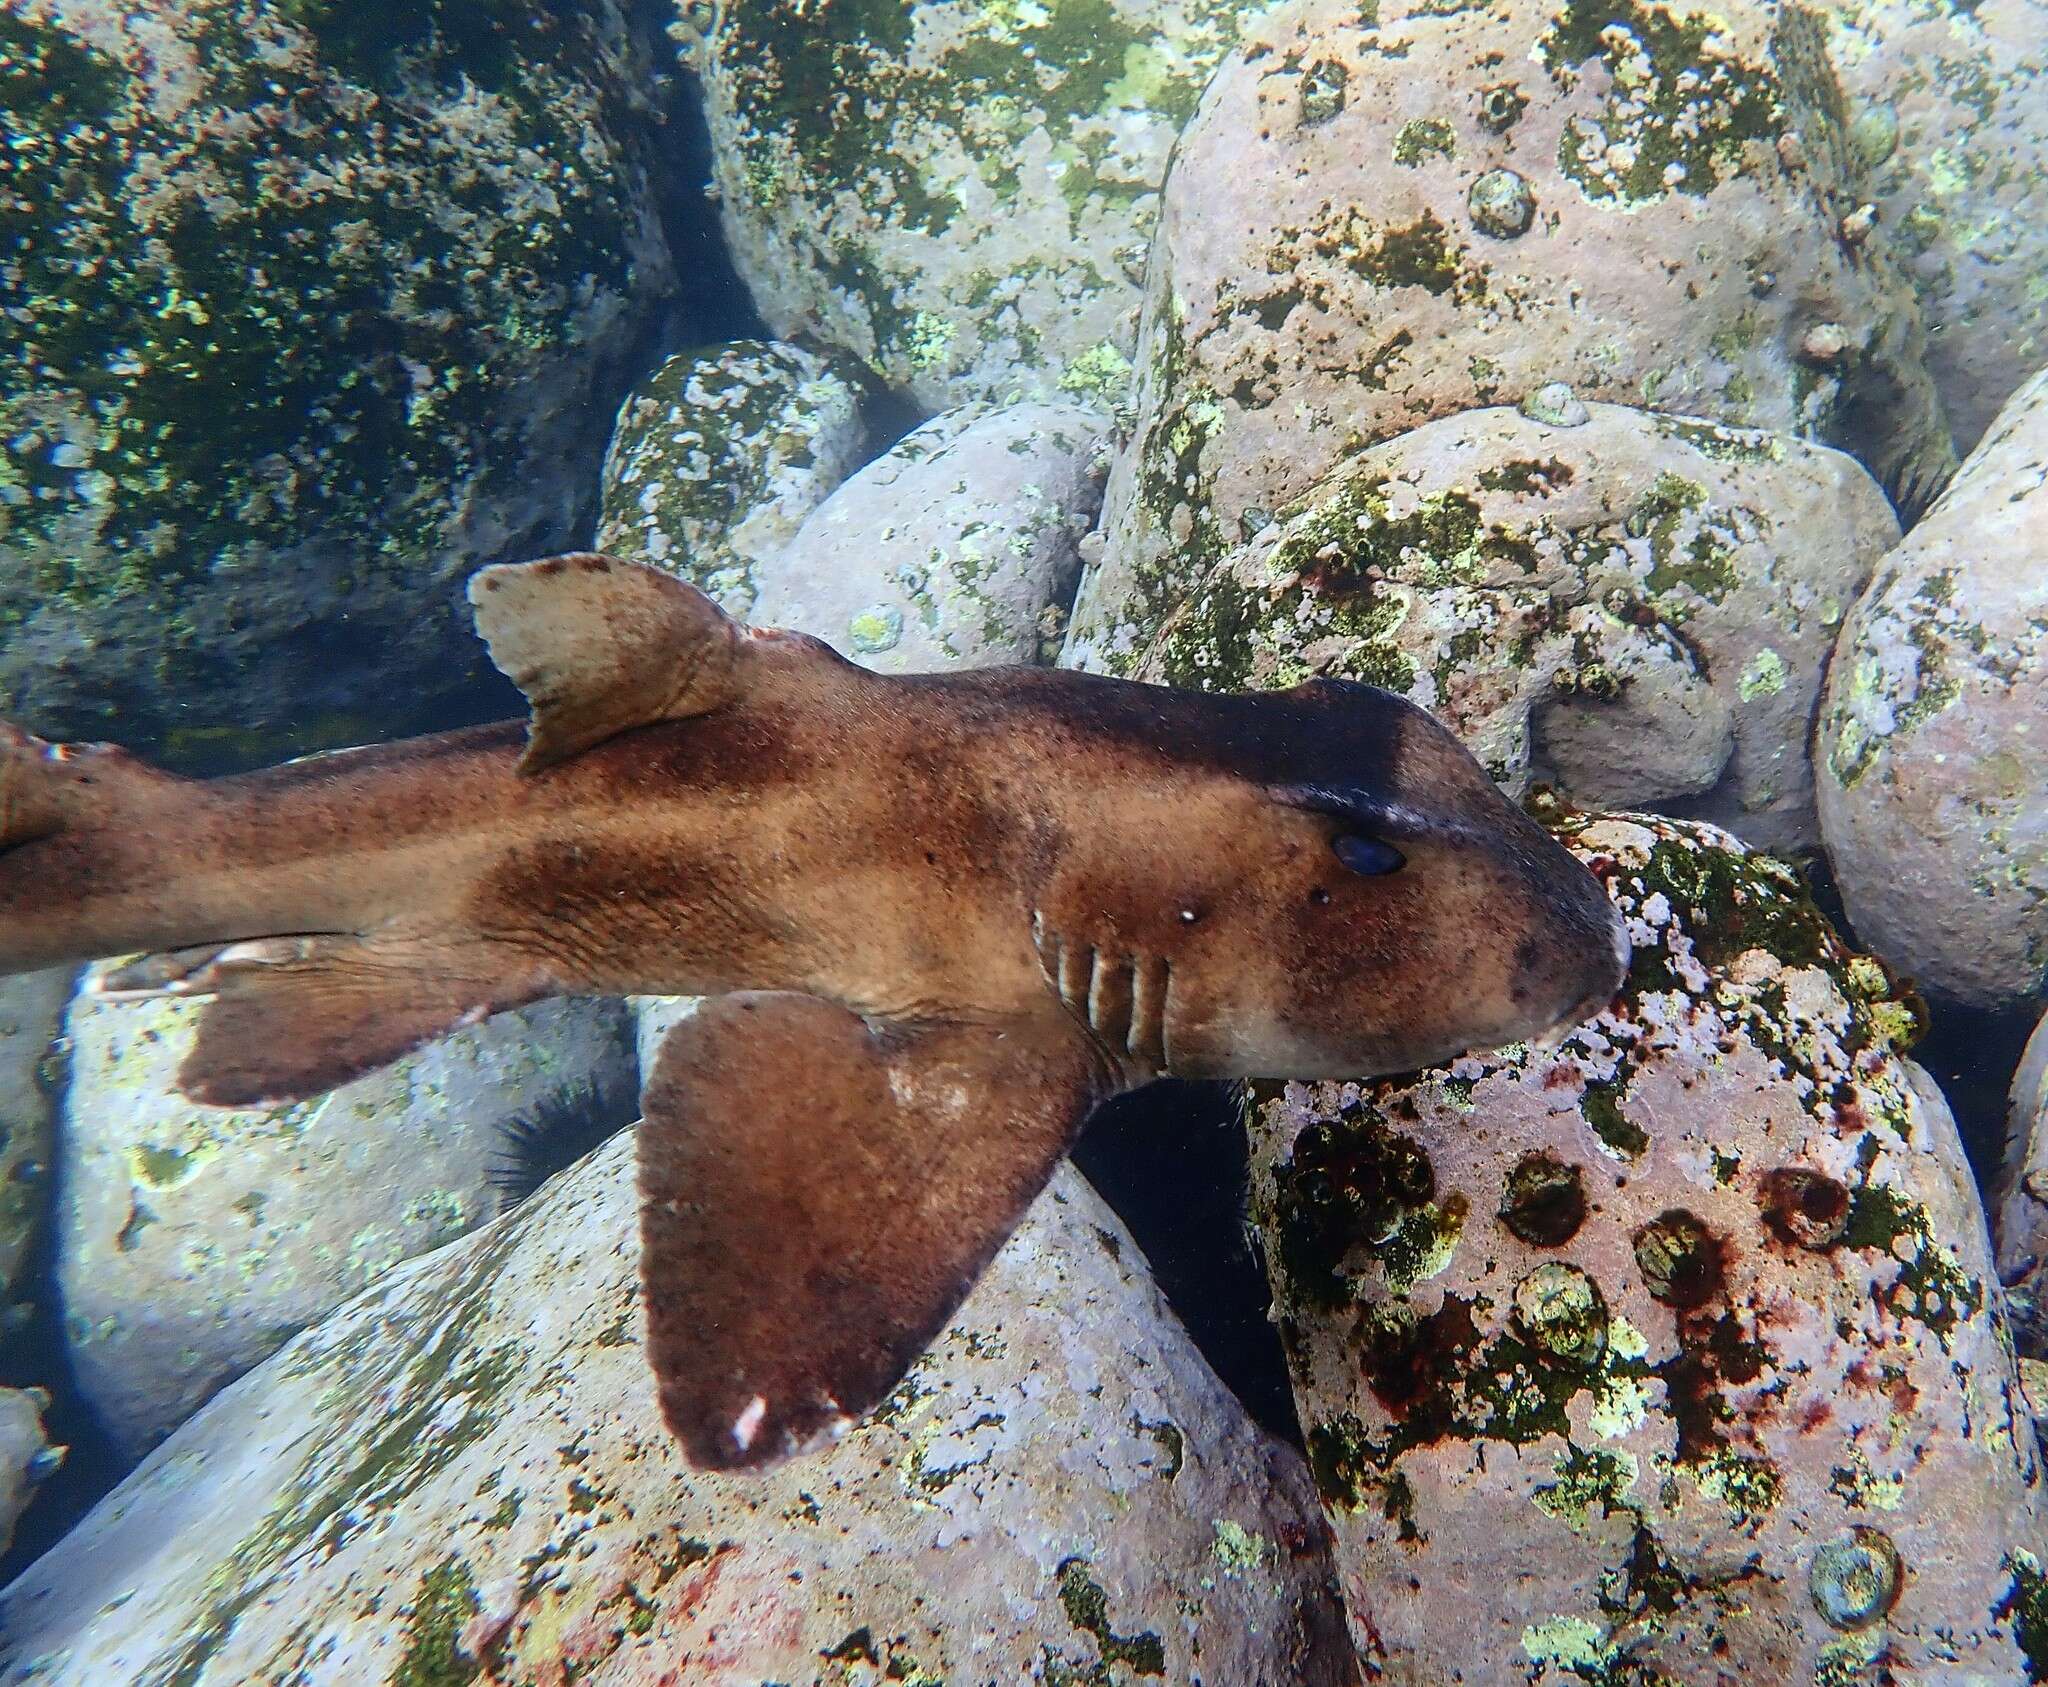 Image of Crested Bullhead Shark